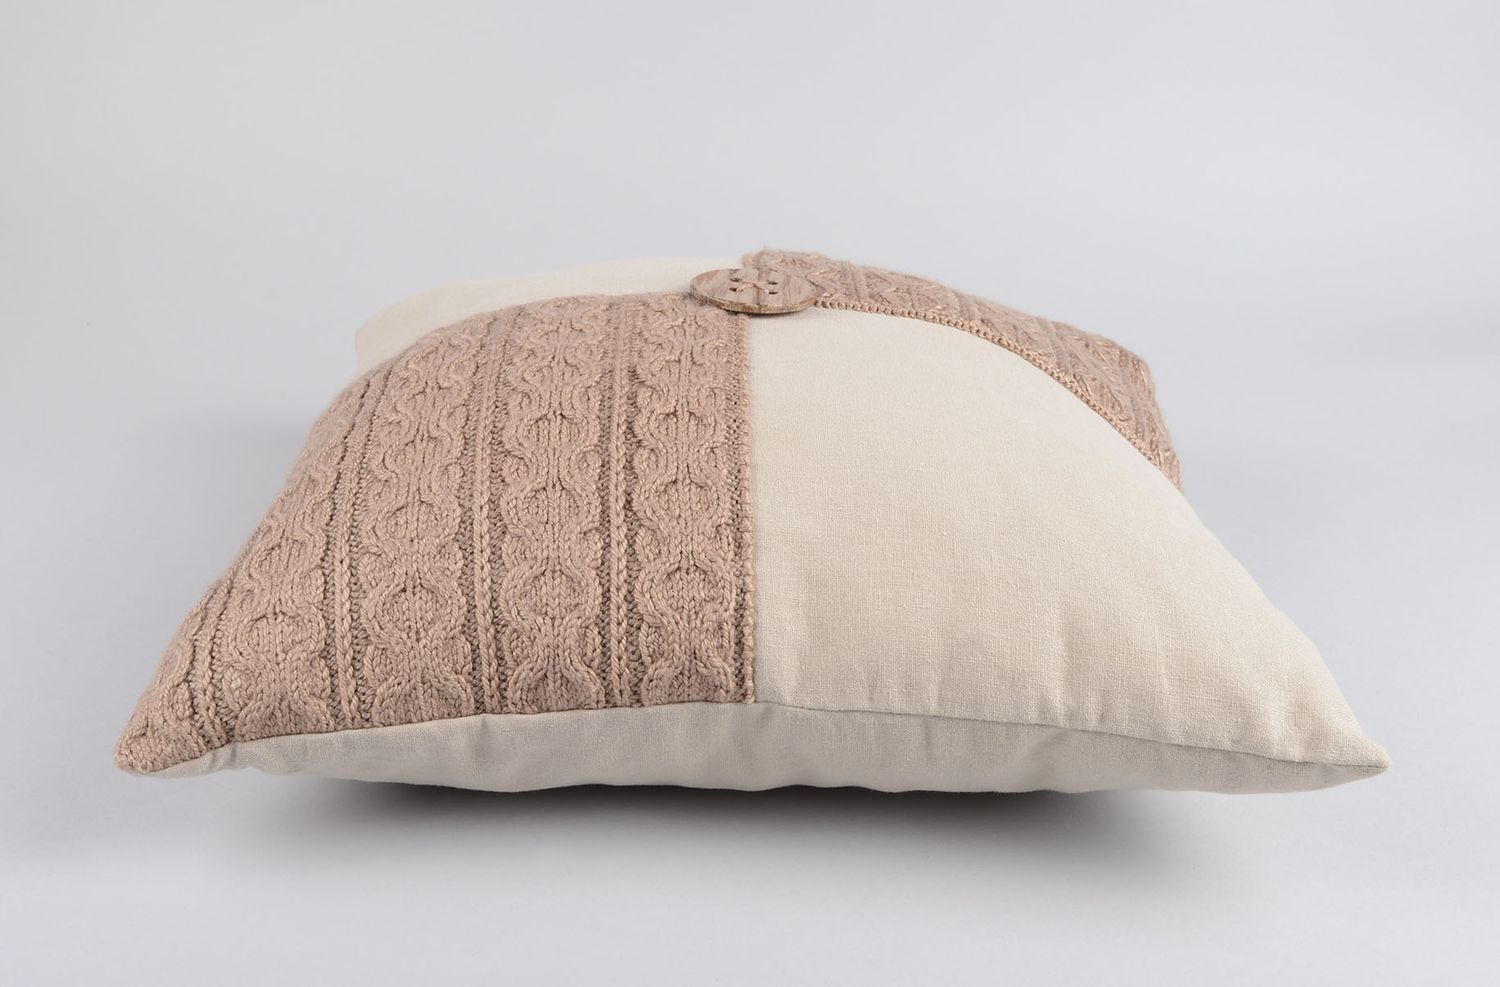 Stylish handmade throw pillow soft pillow design bedroom designs gift ideas photo 1